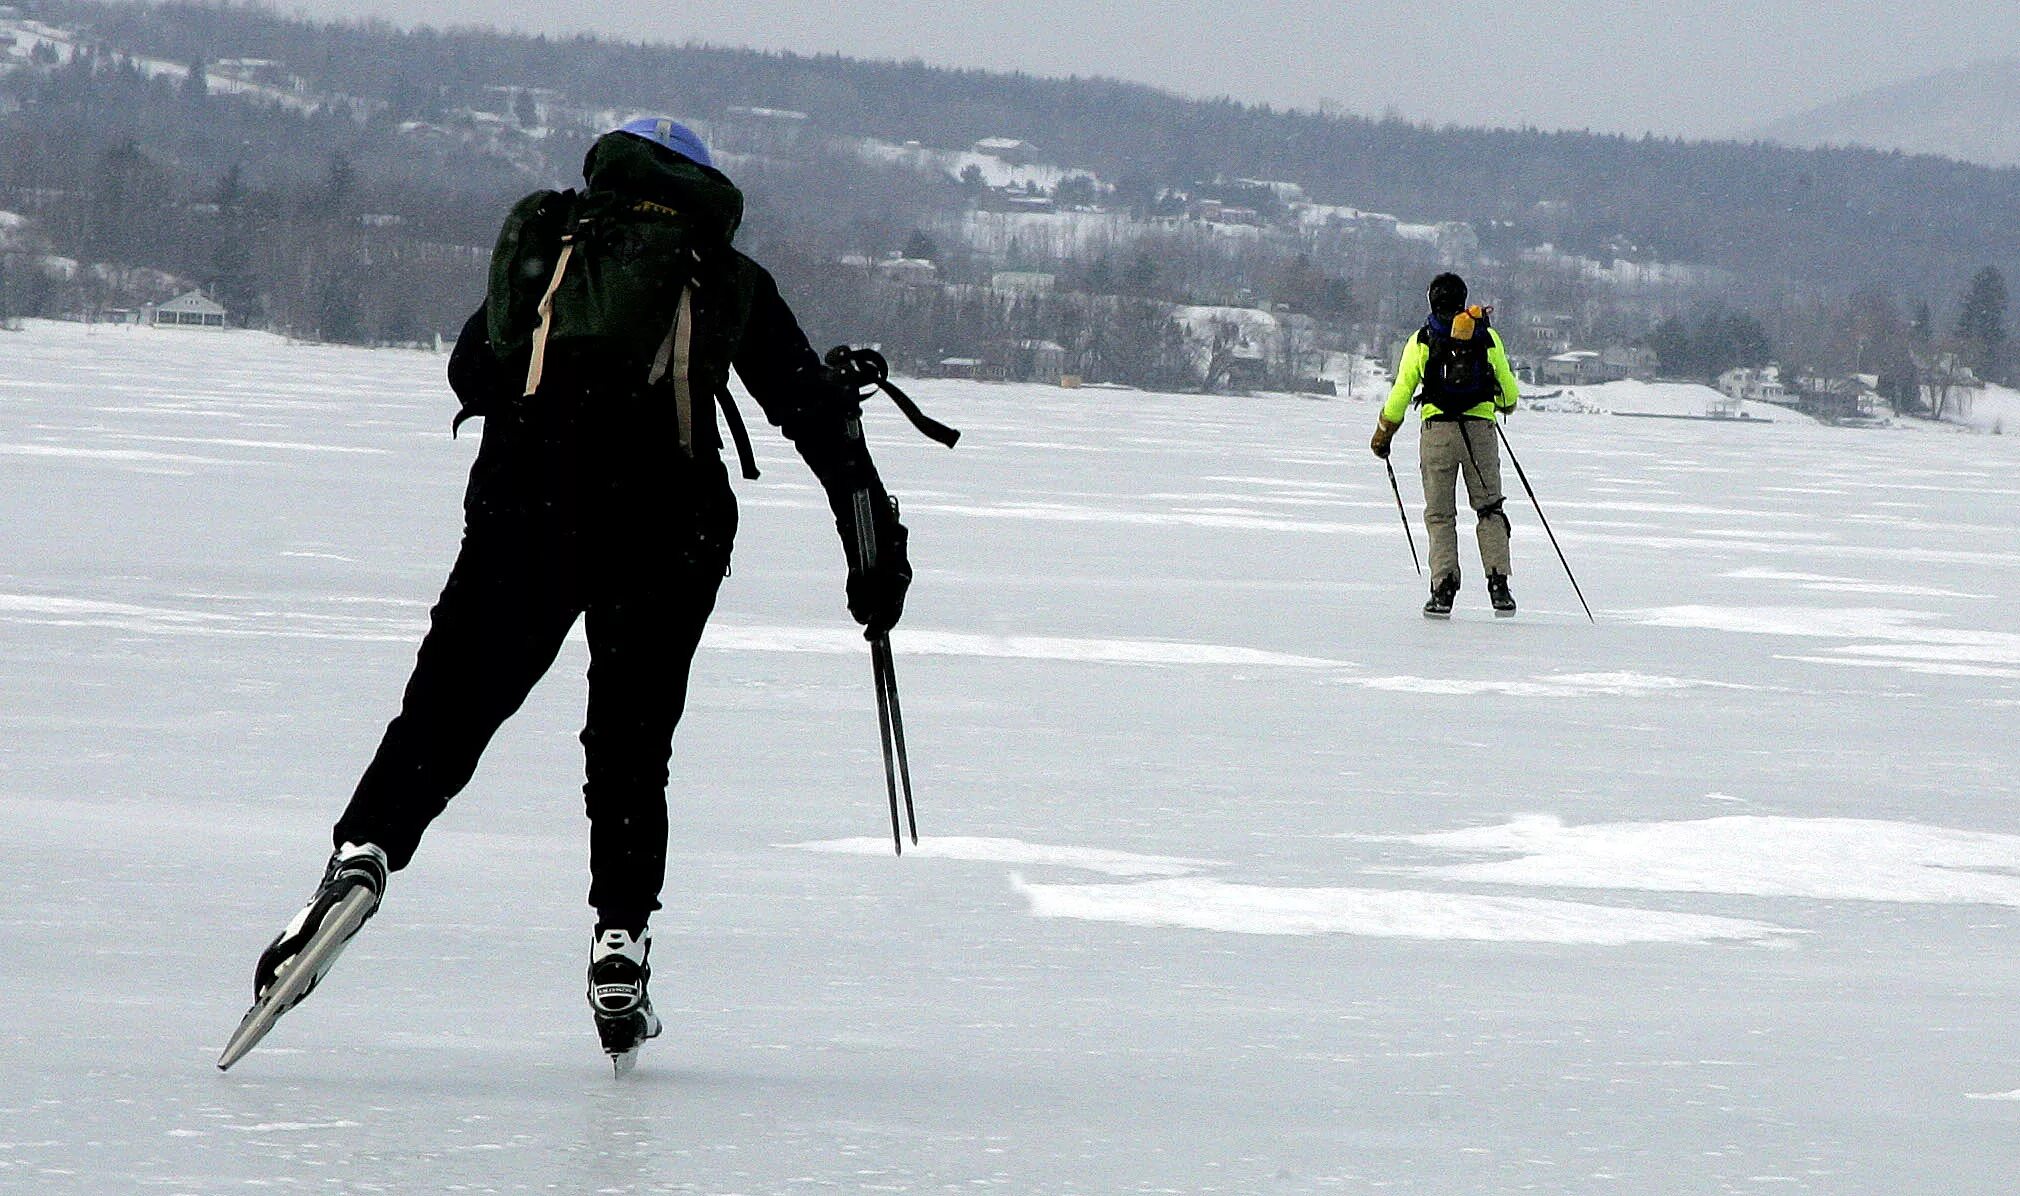 Айс скейтинг. Nordic Skating коньки. Nordic Ice Skating. Лыжи или коньки. Ice skis